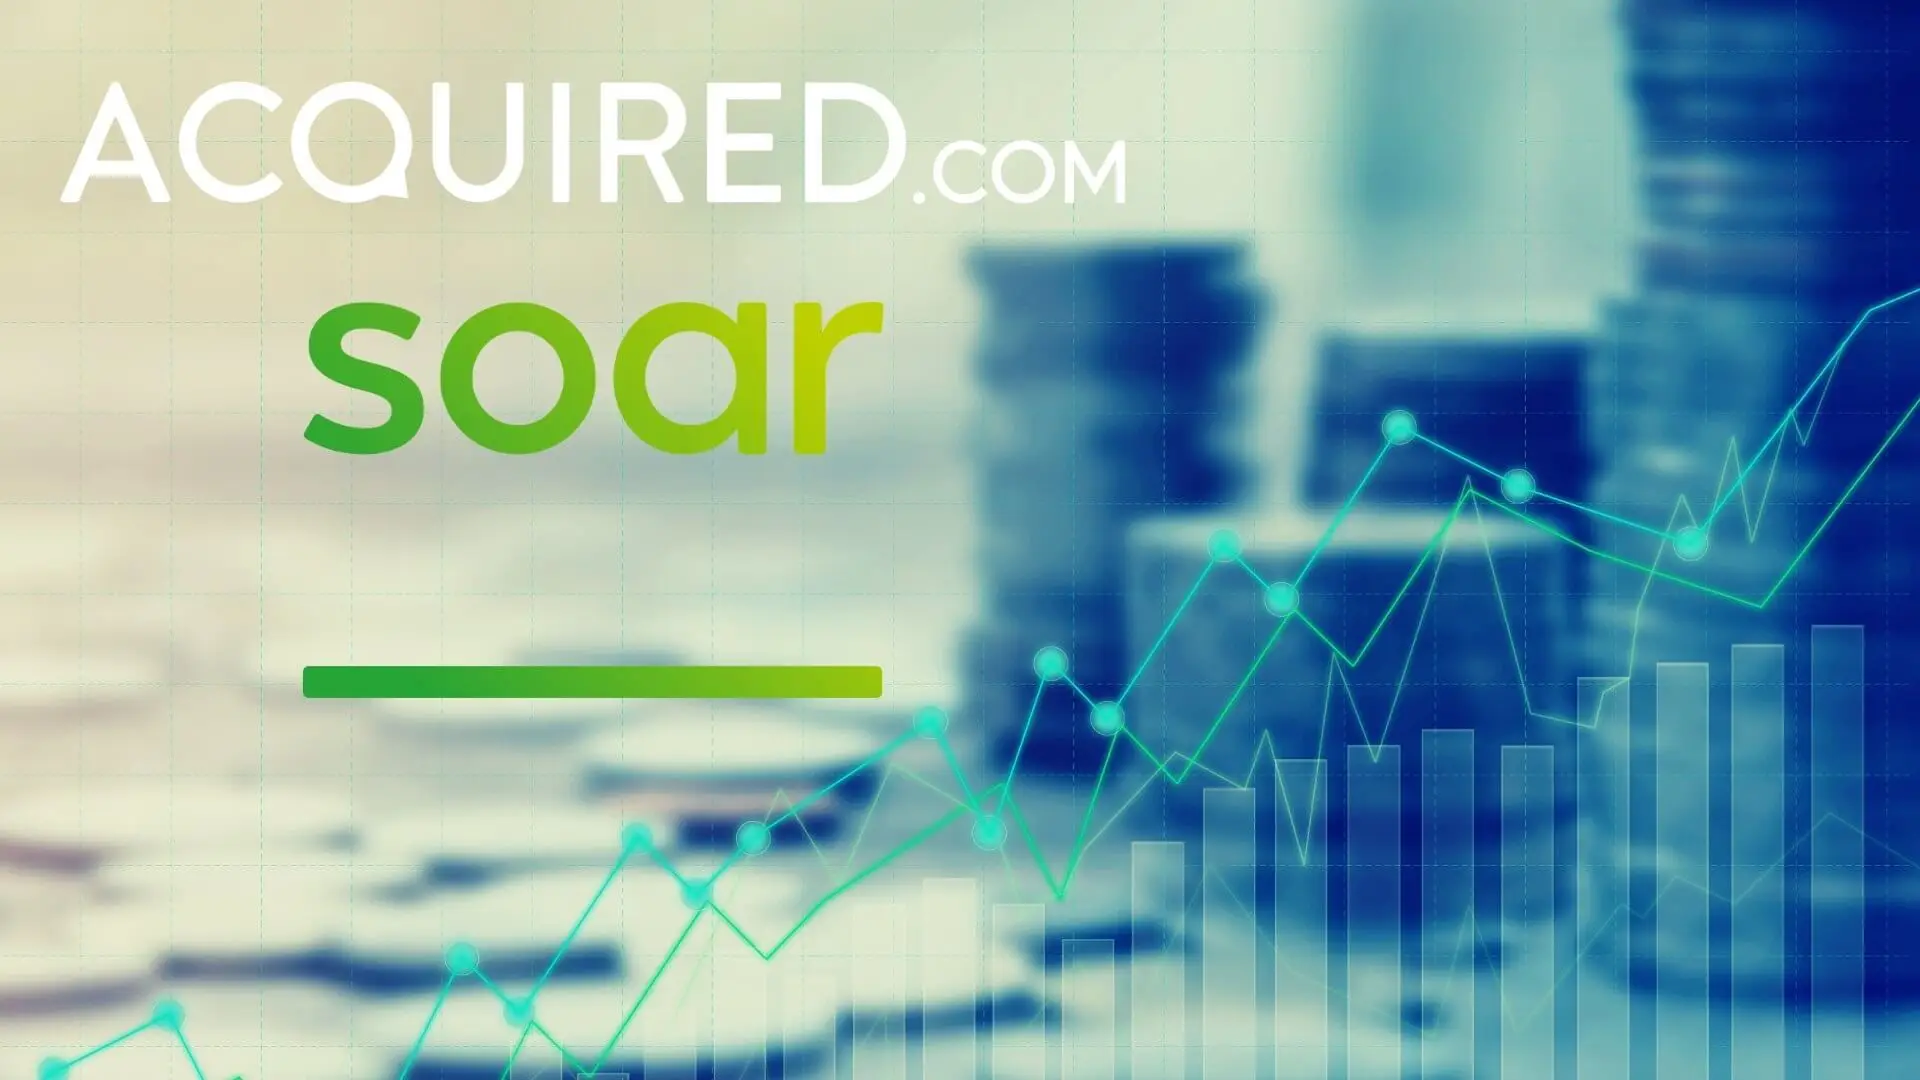 Soar and Acquired.com Team Up to Create a Transparent Service Platform